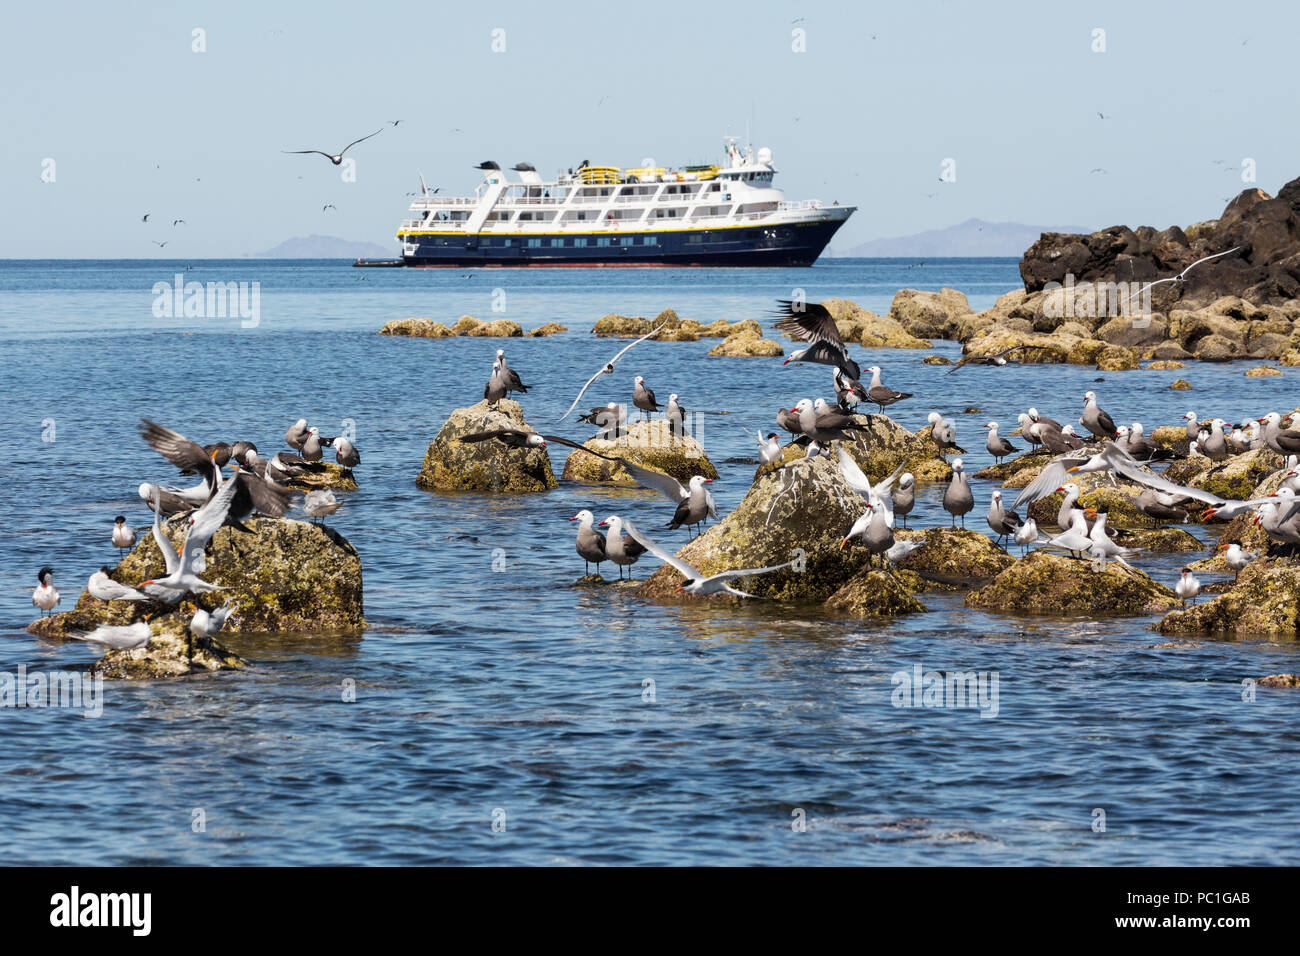 Die lindblad Expeditions Schiff National Geographic Sea Lion in Baja California, Mexiko. Stockfoto